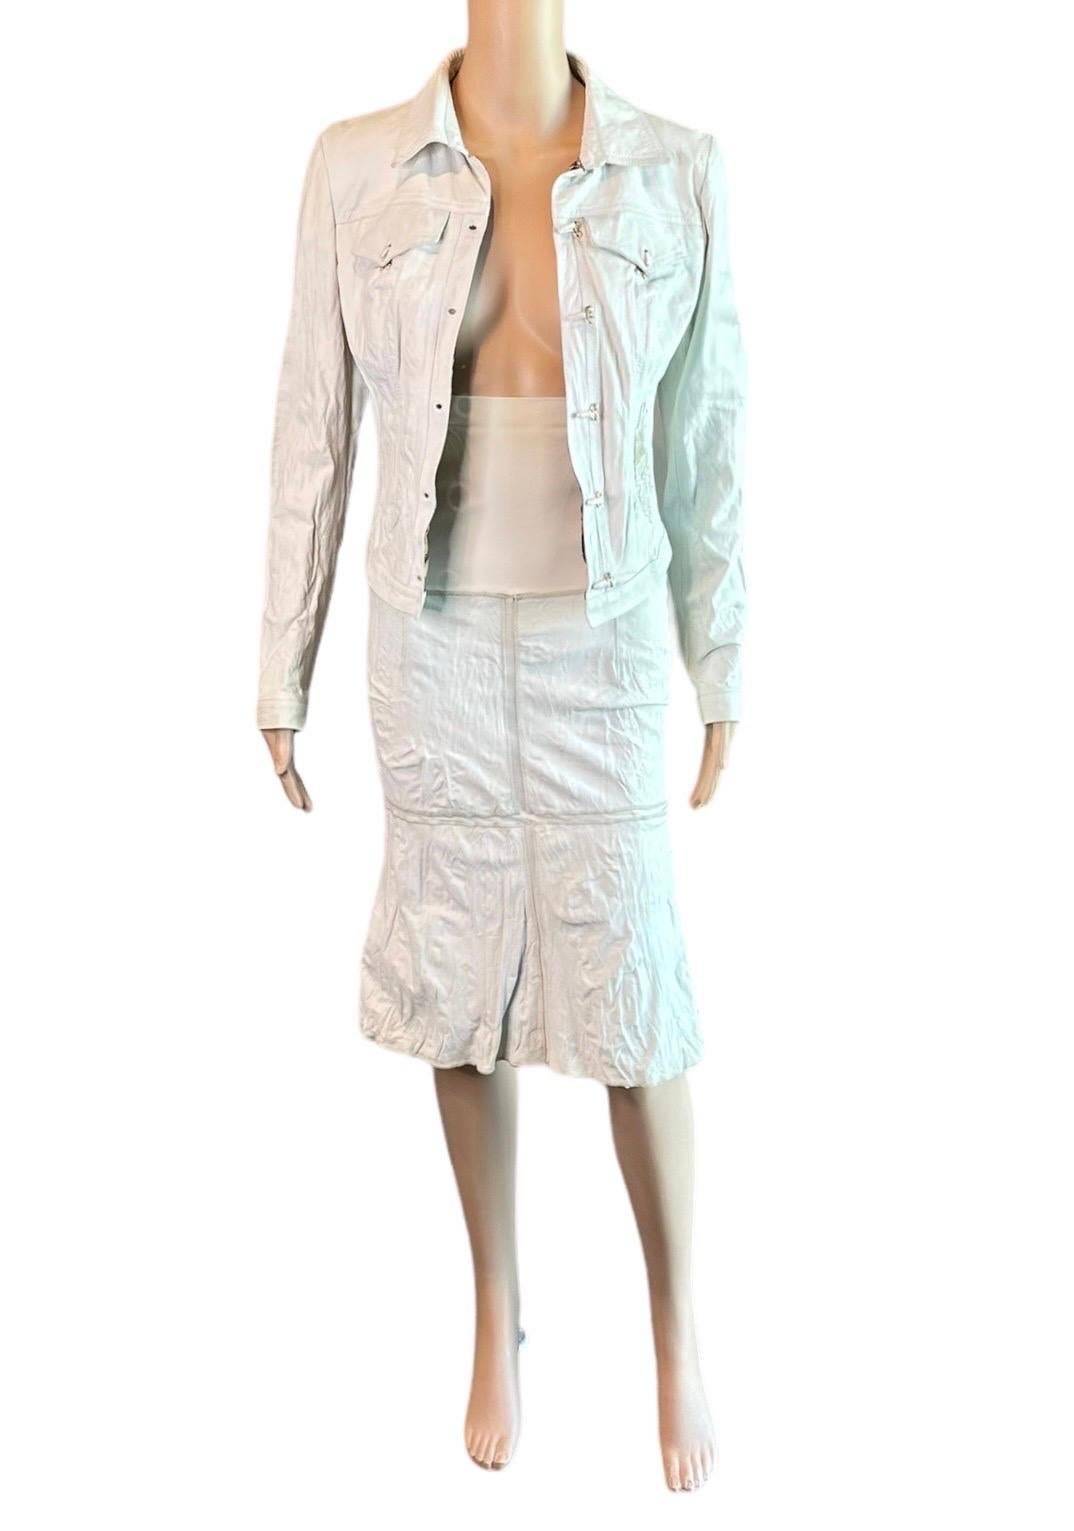 Roberto Cavalli S/S 2003 Unworn Leather Jacket Coat & Skirt 2 Piece Set Ensemble For Sale 4